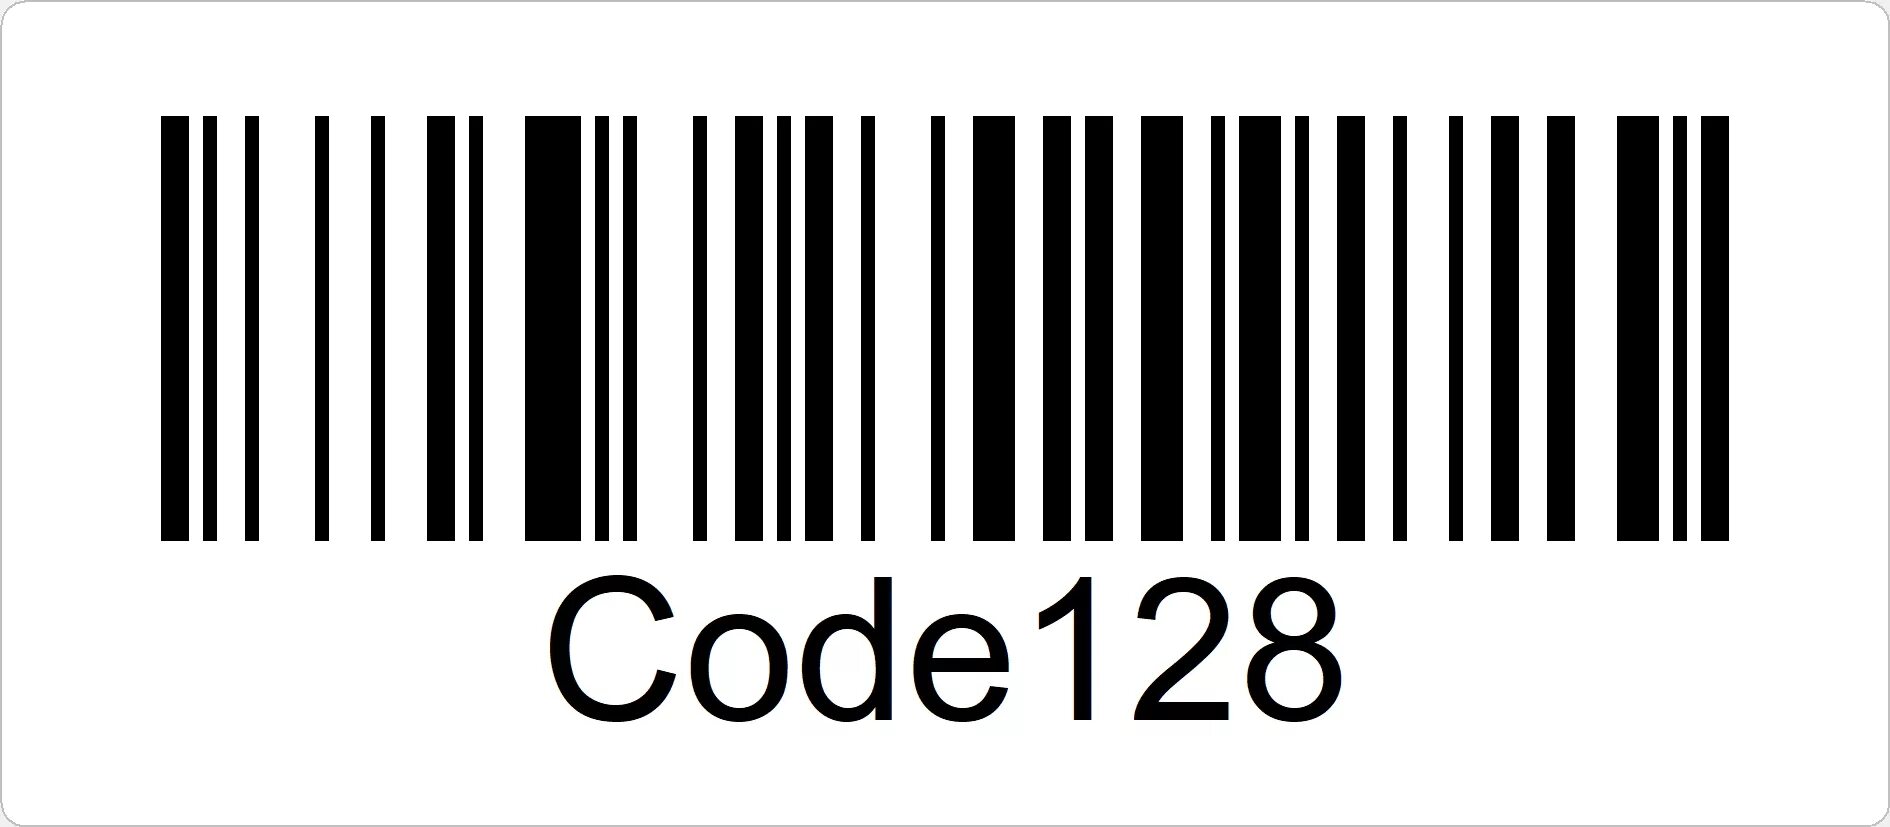 Штриховой код code128. Штрих код Barcode 128. EAN-13 code-128 штрих коды. Code 128 расшифровка. Навести штрих код